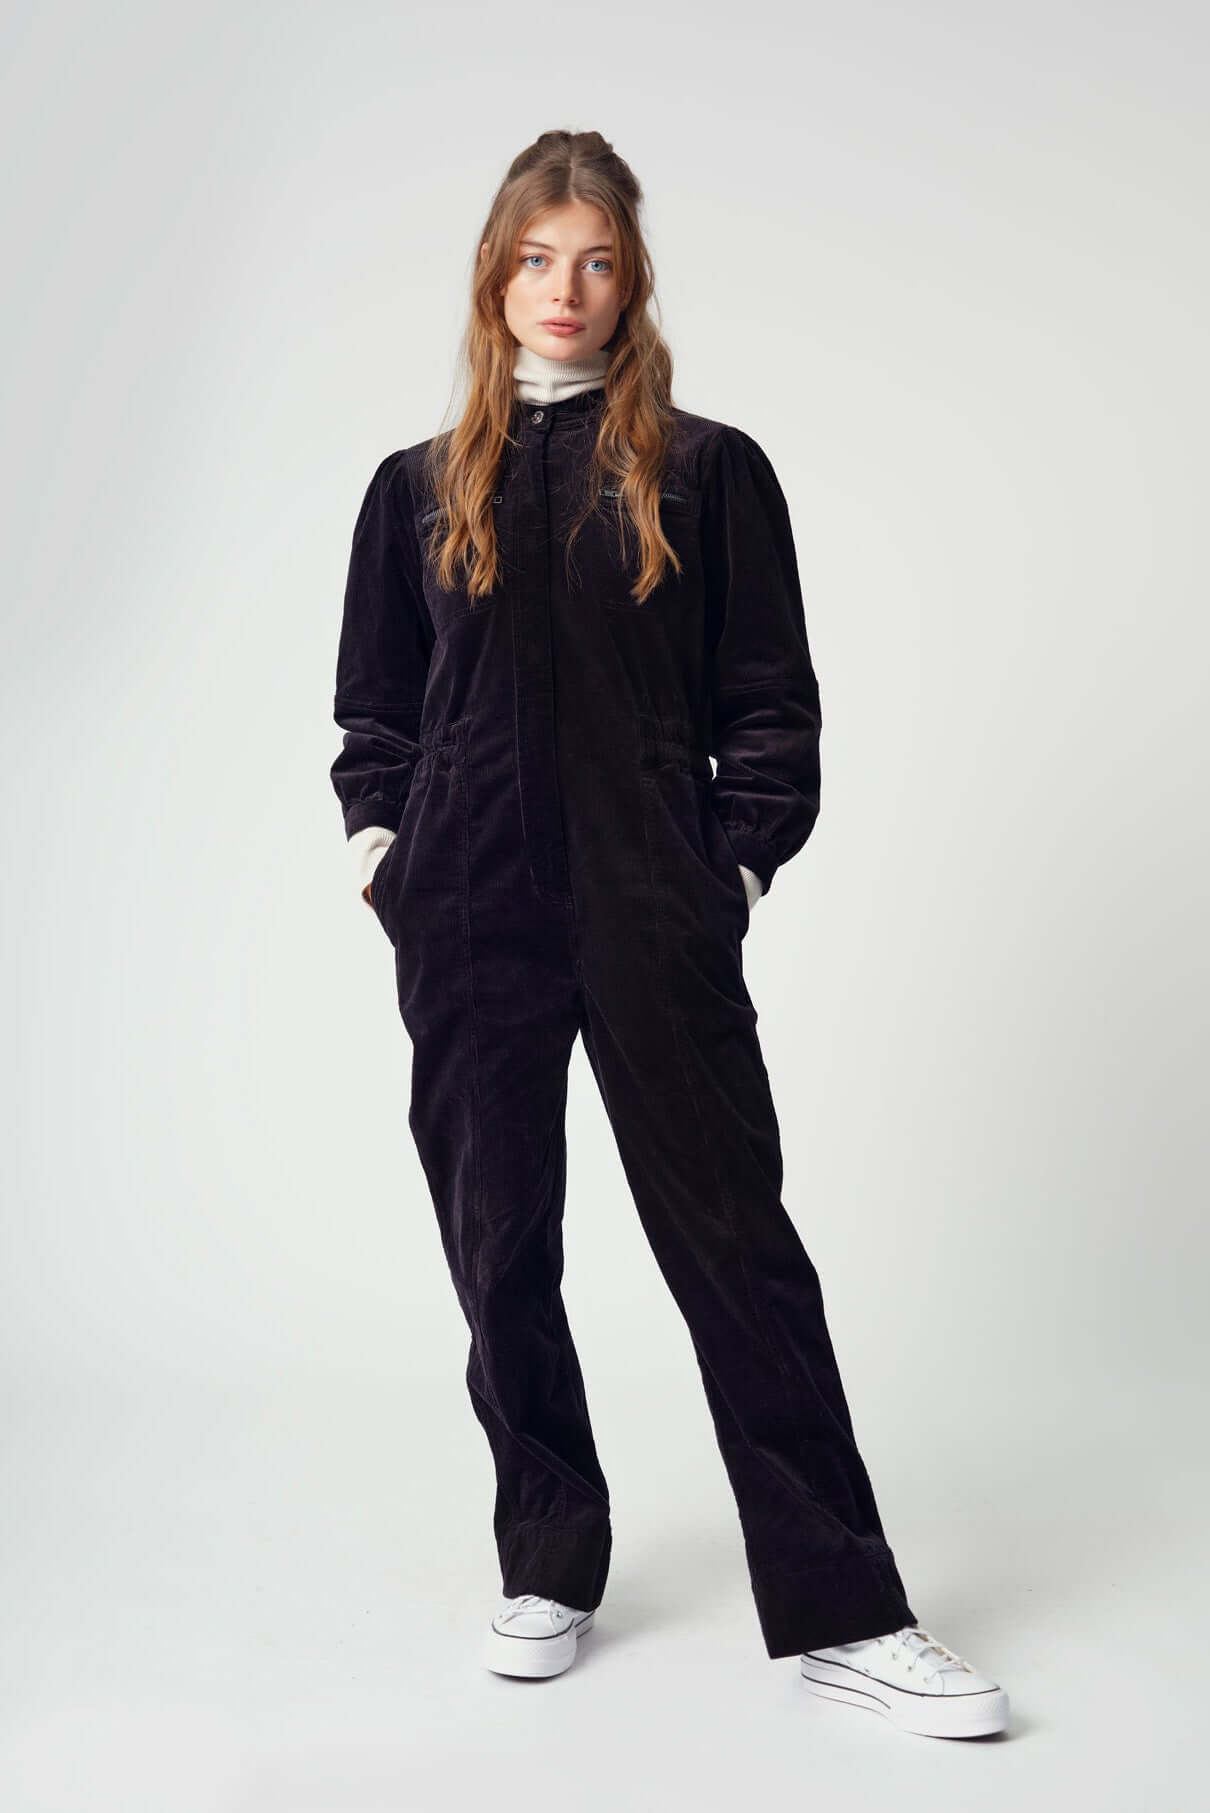 KAWA Womens Organic Cotton Jumpsuit Black, Size 1 / UK 8 / EUR 36